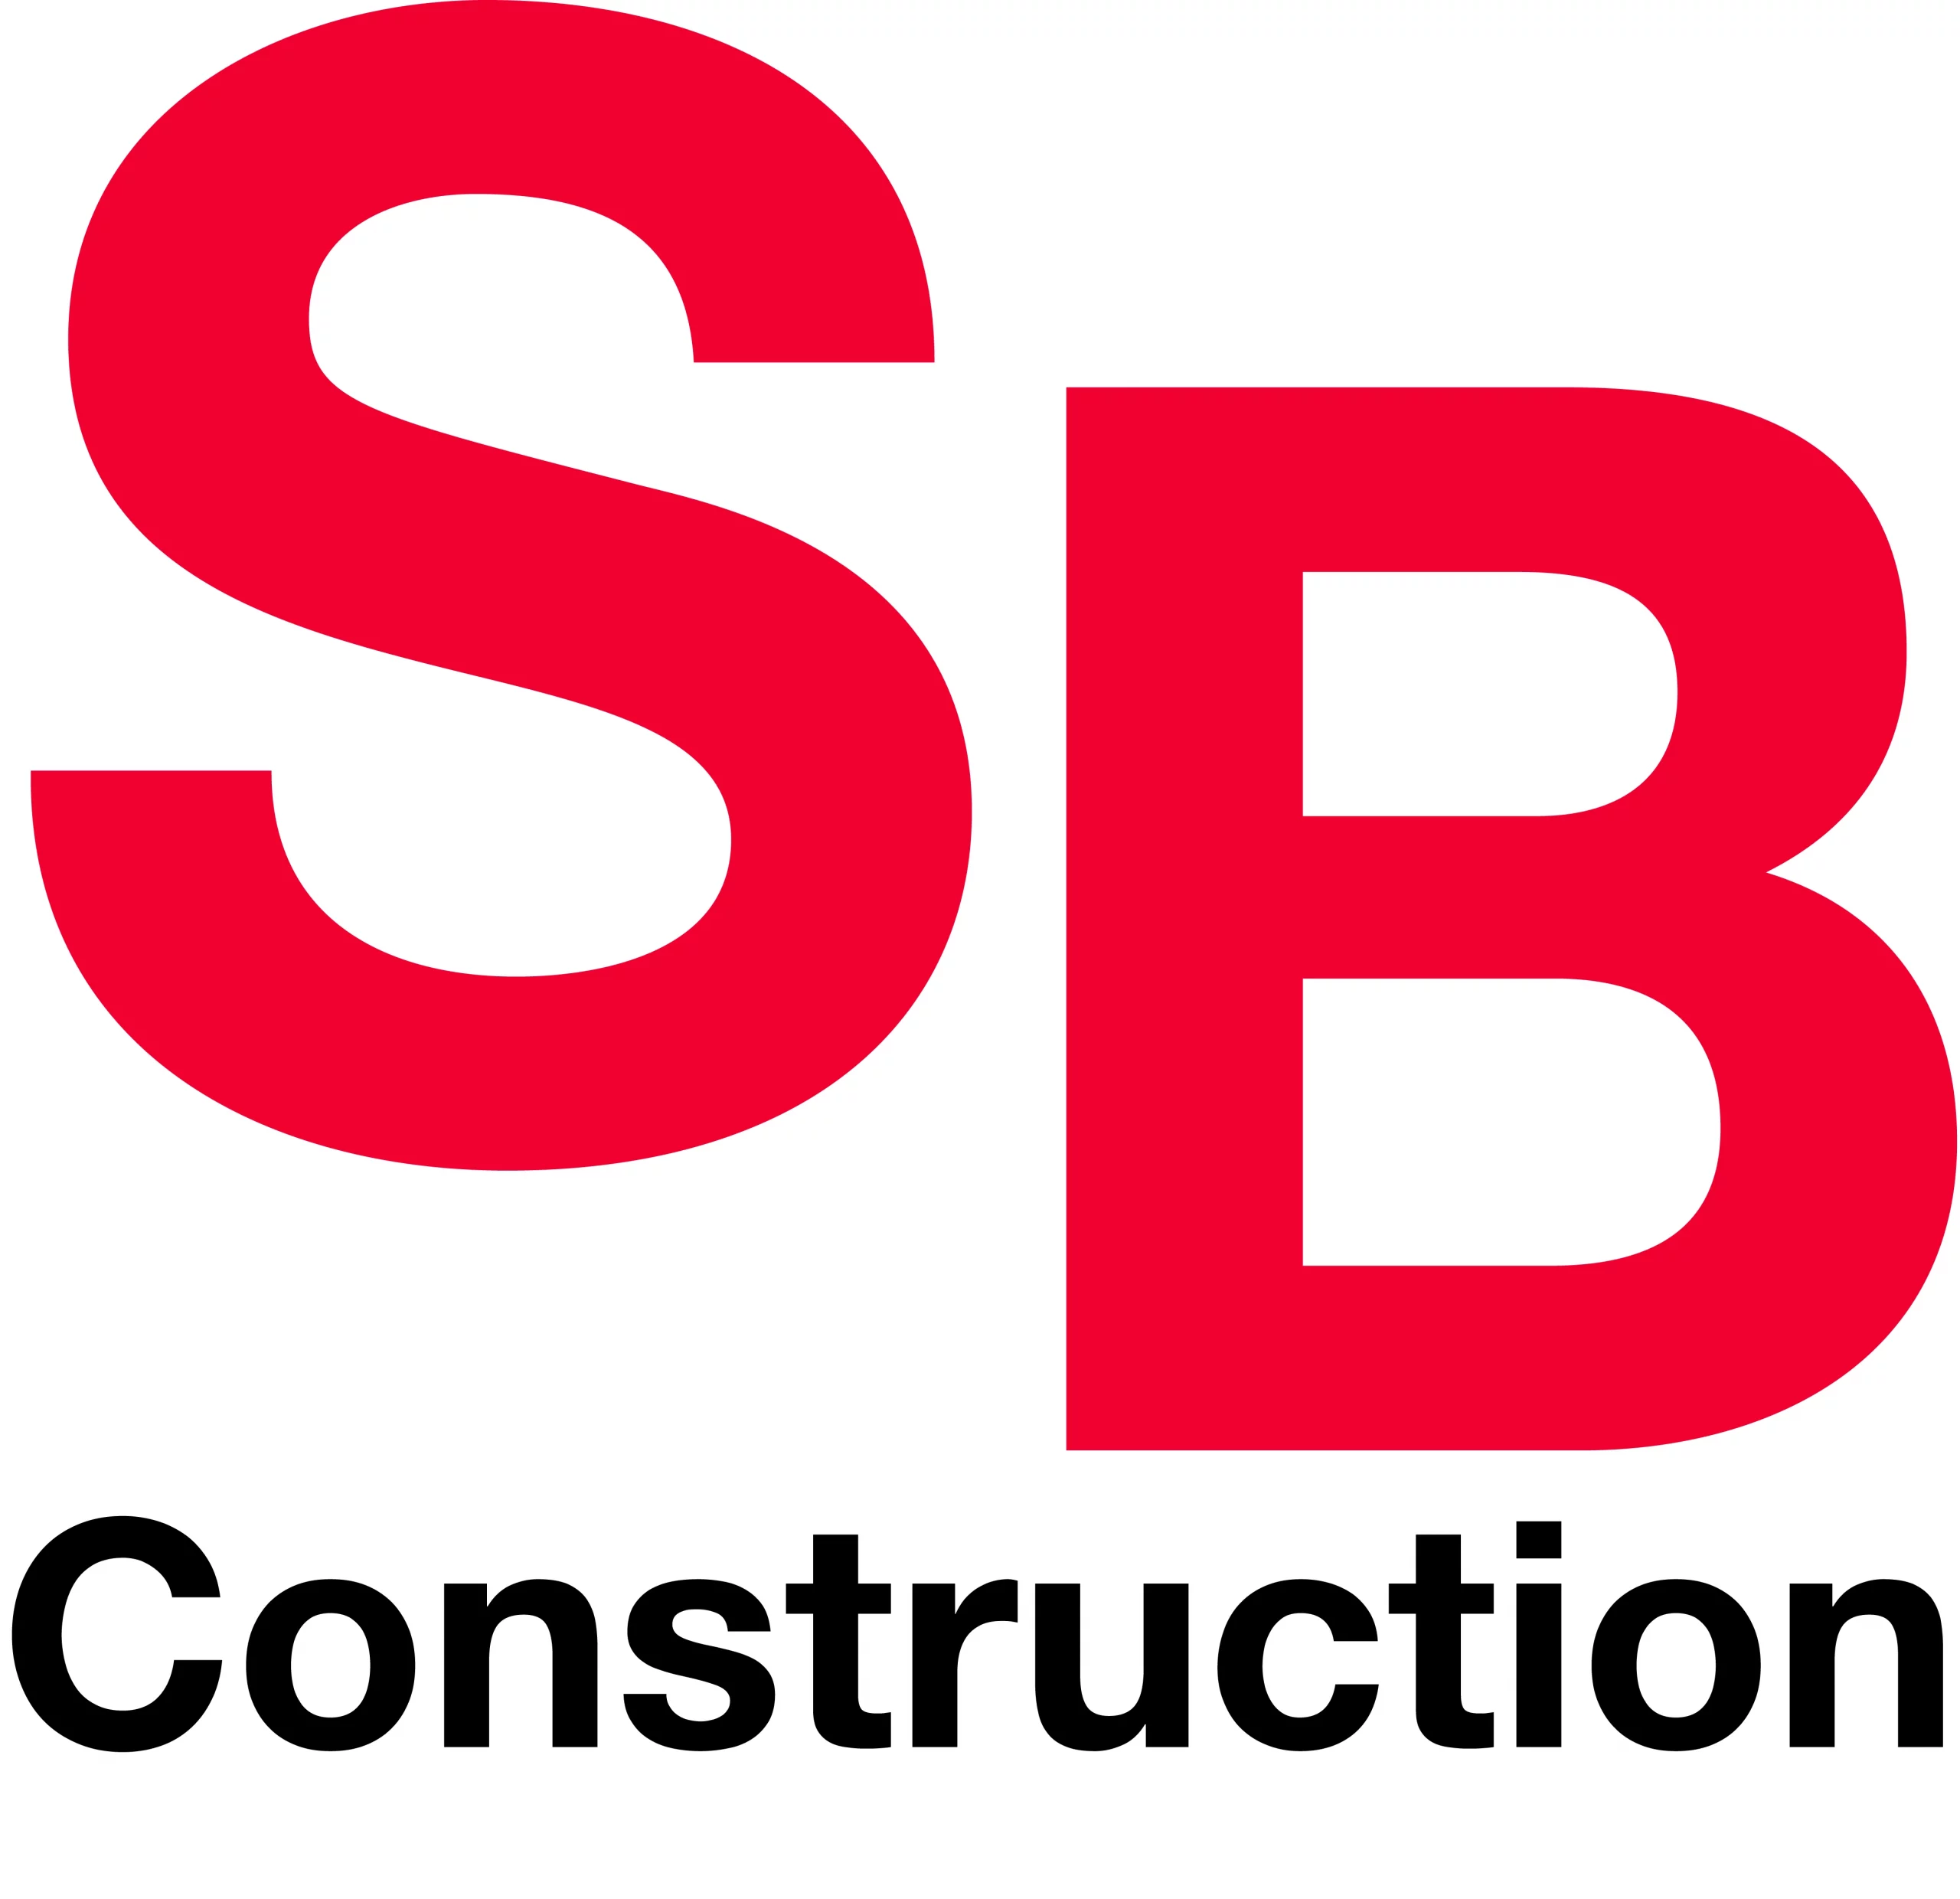 SB Construction logo church builder